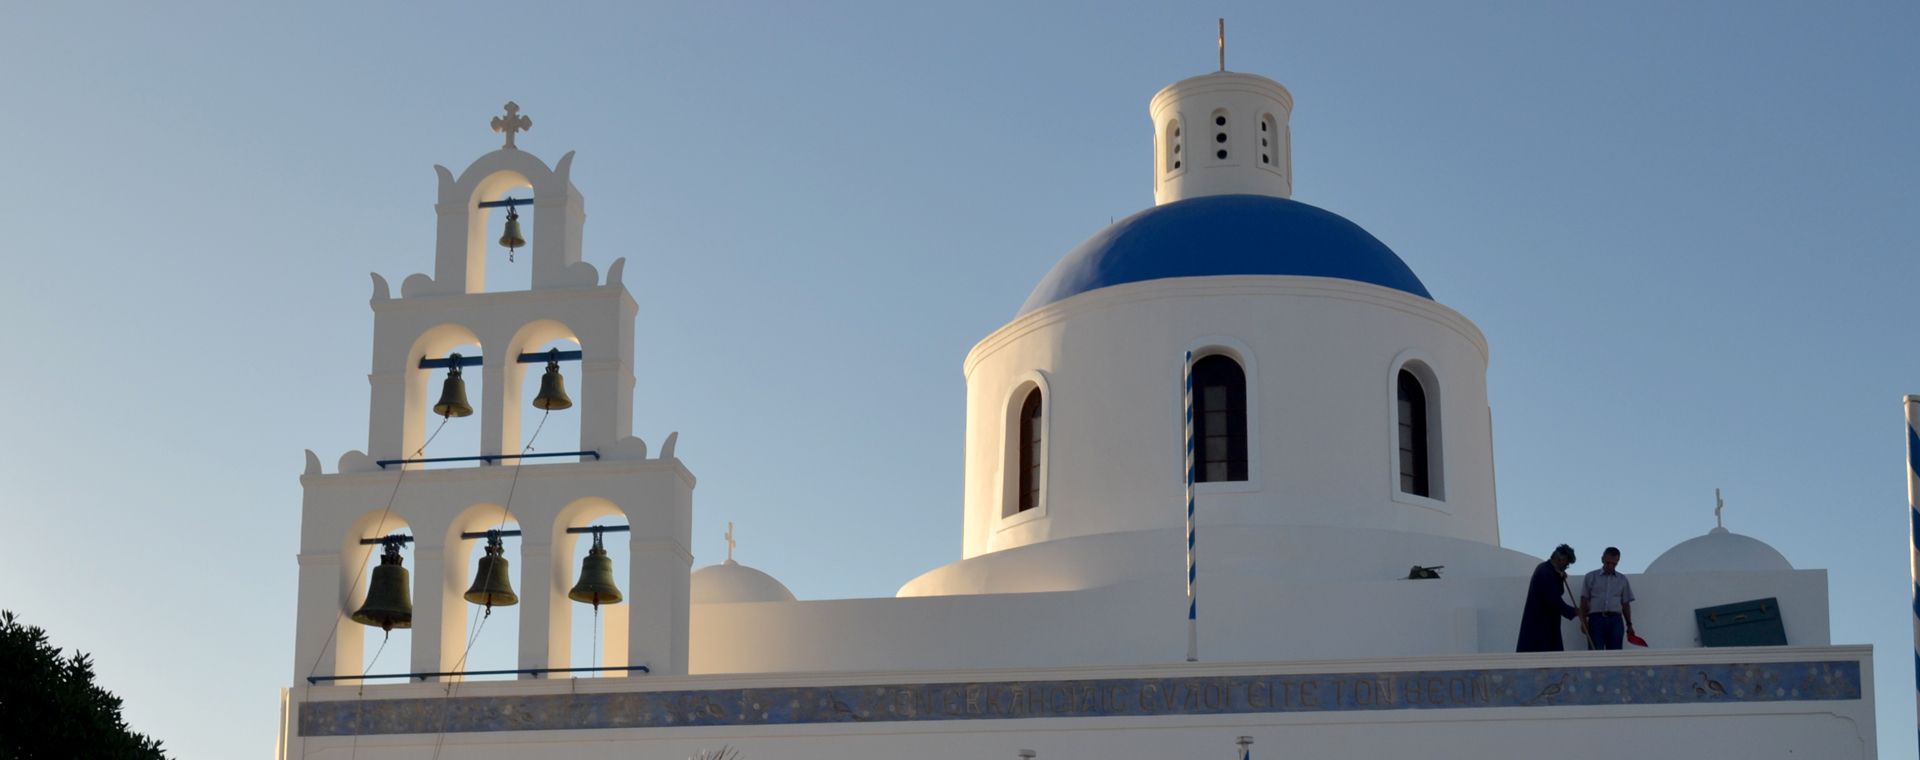 Église typique de Santorin